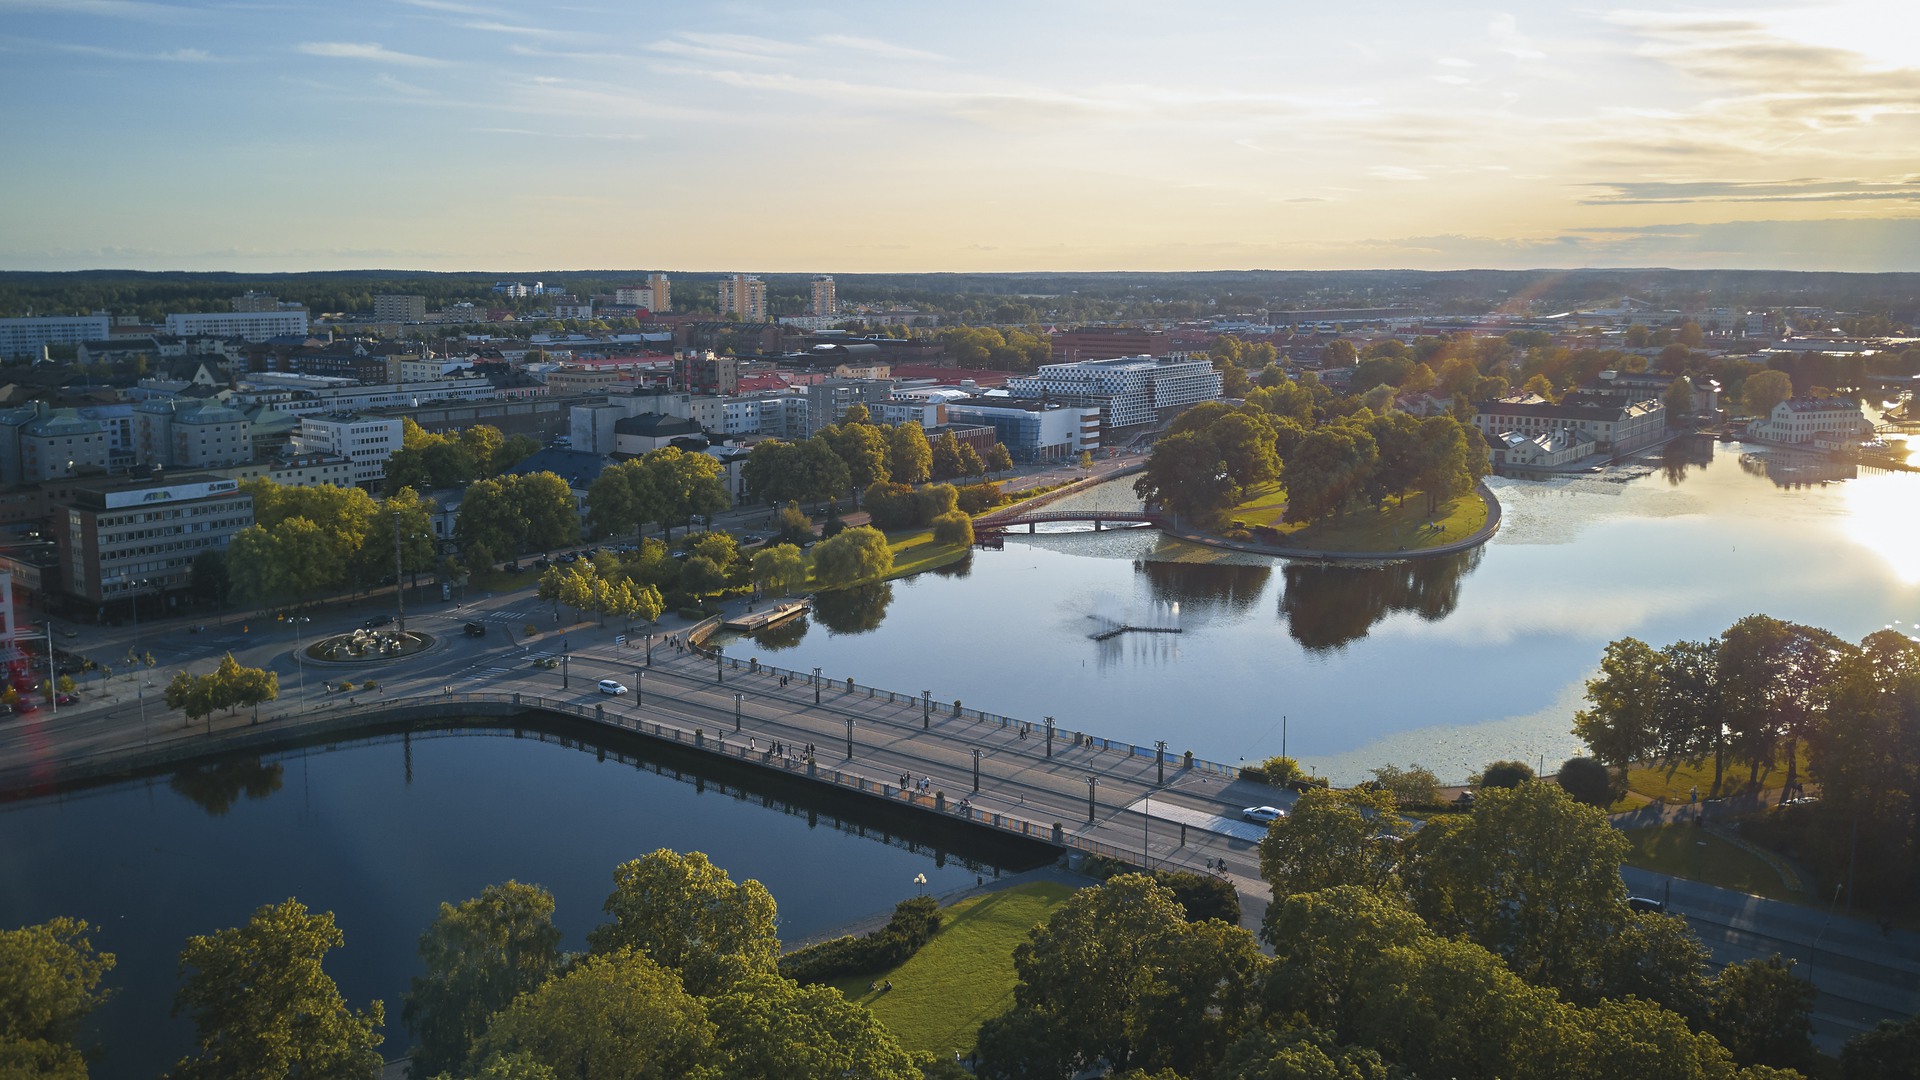 Drönarbild över Eskilstuna med Nybron i fokus